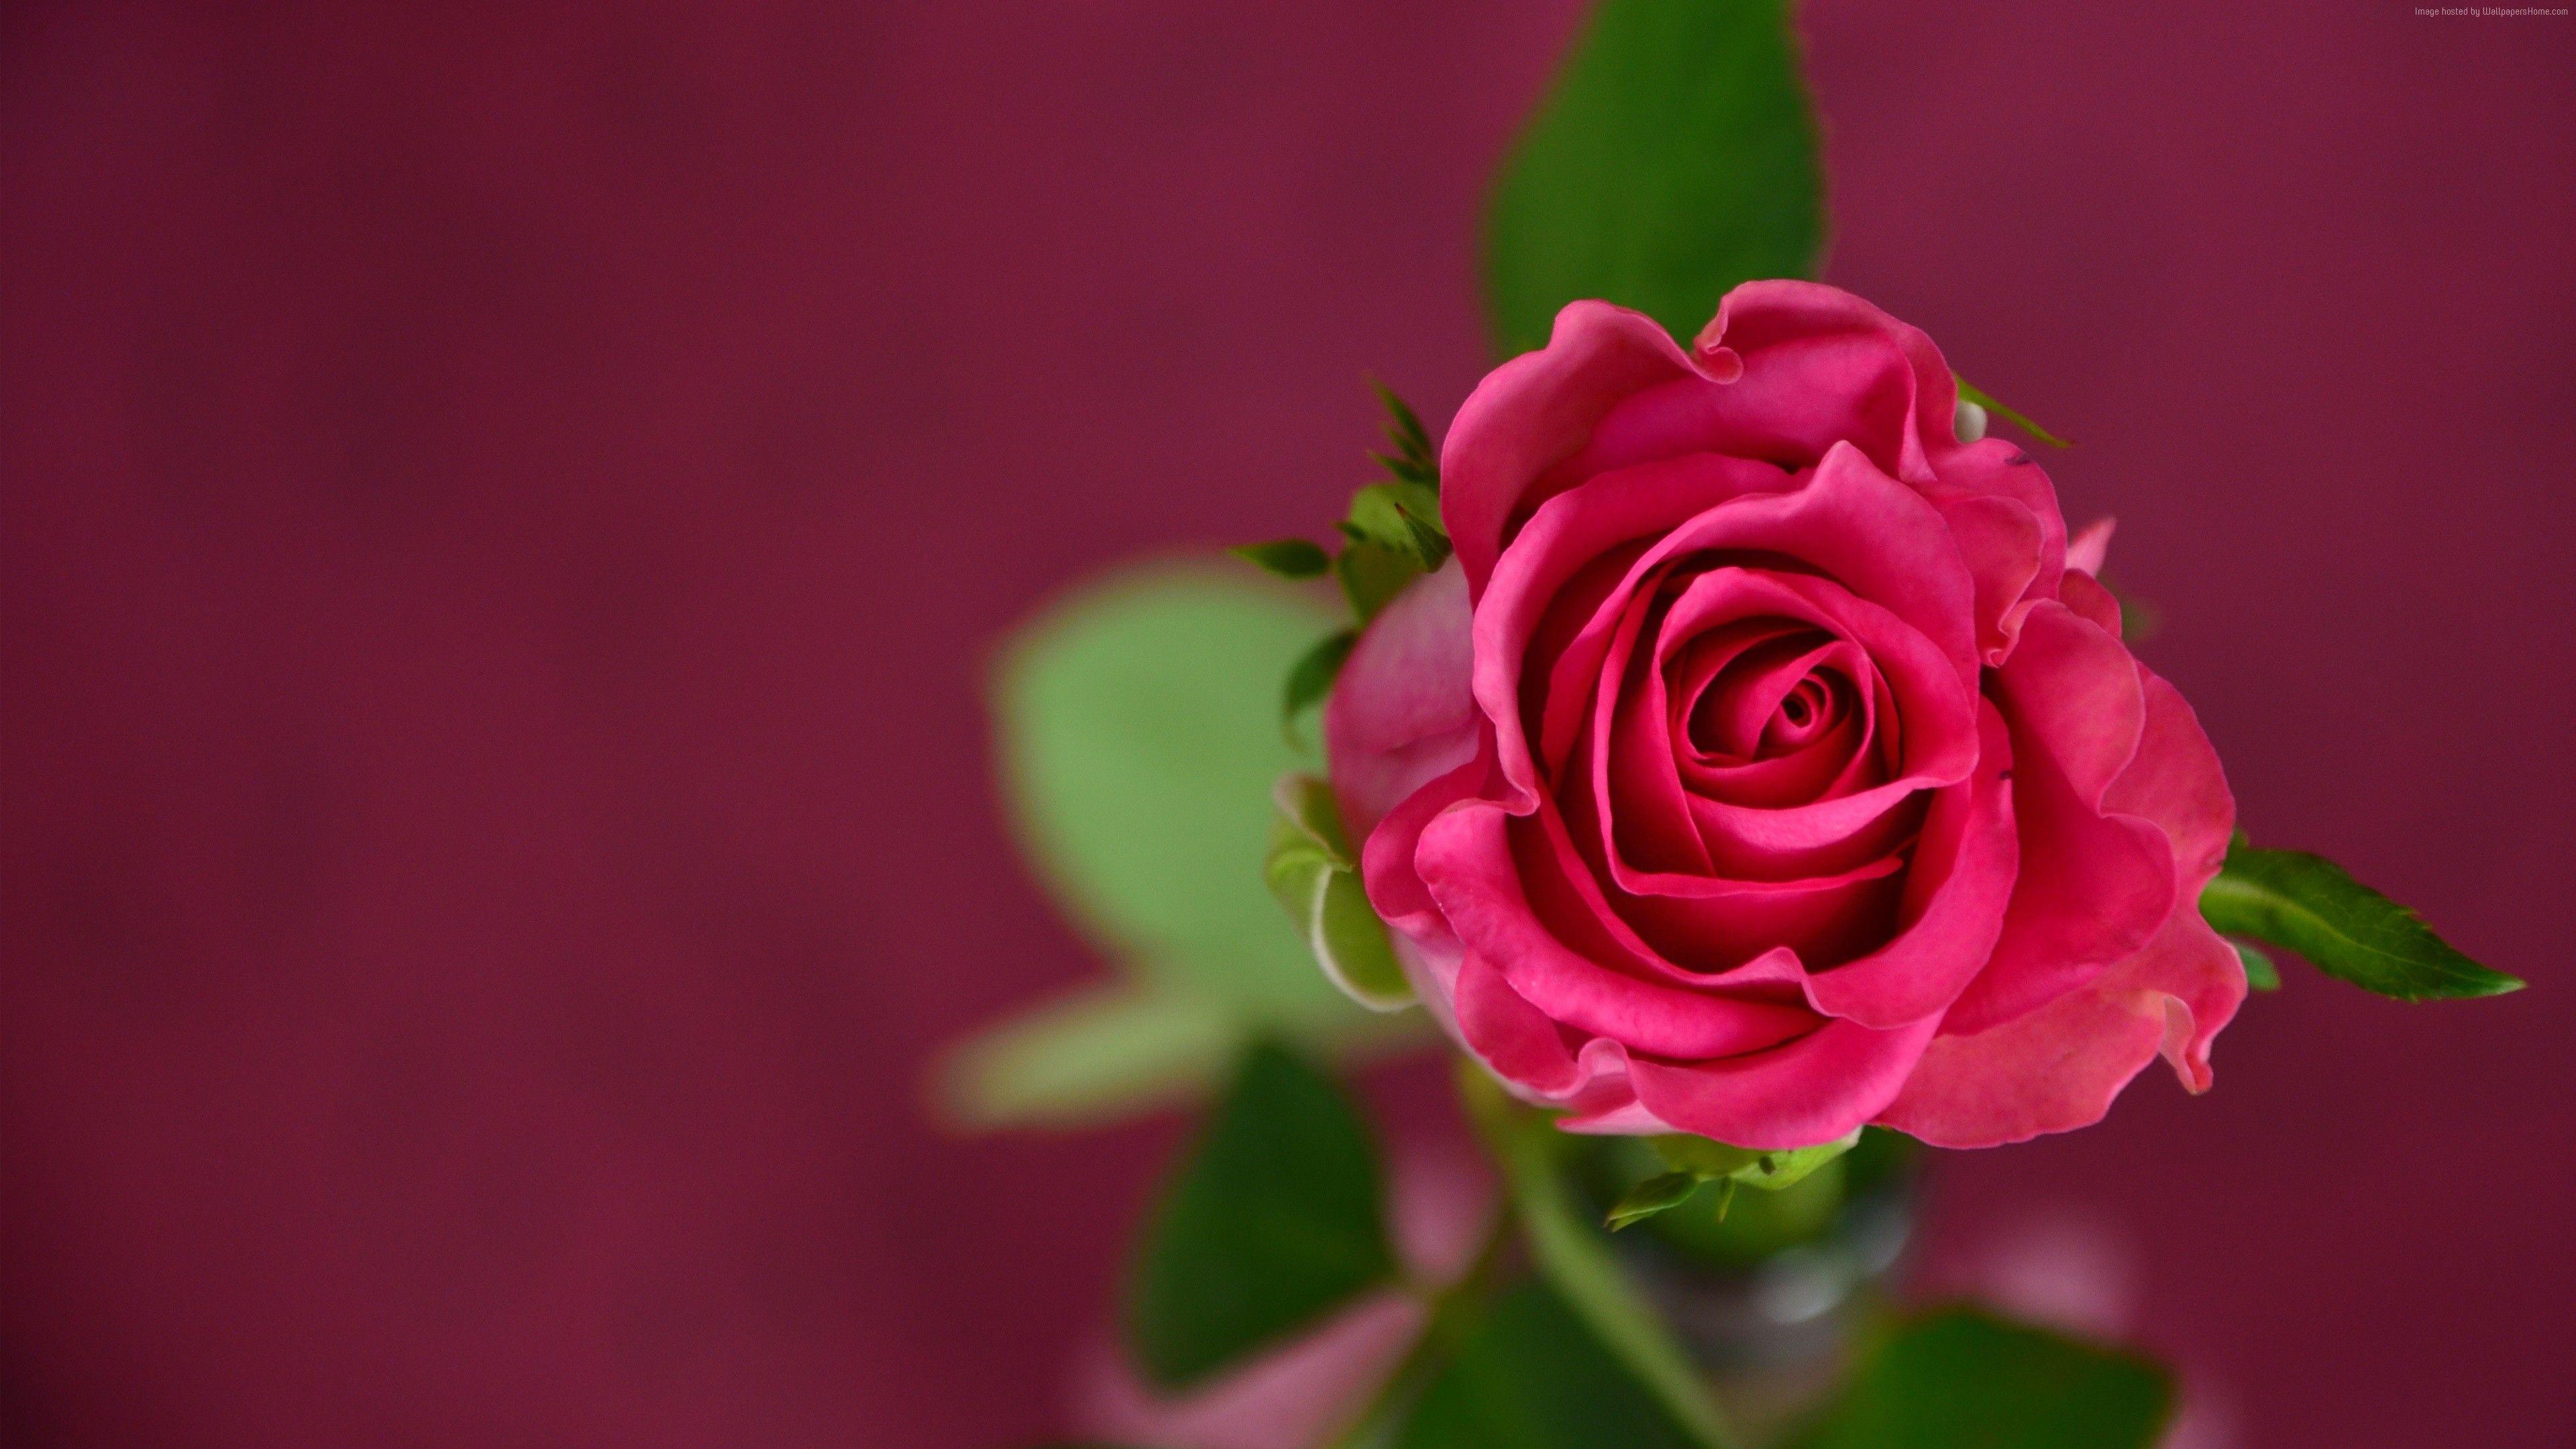 Rose 4k, HD Flowers, 4k Wallpaper, Image, Background, Photo